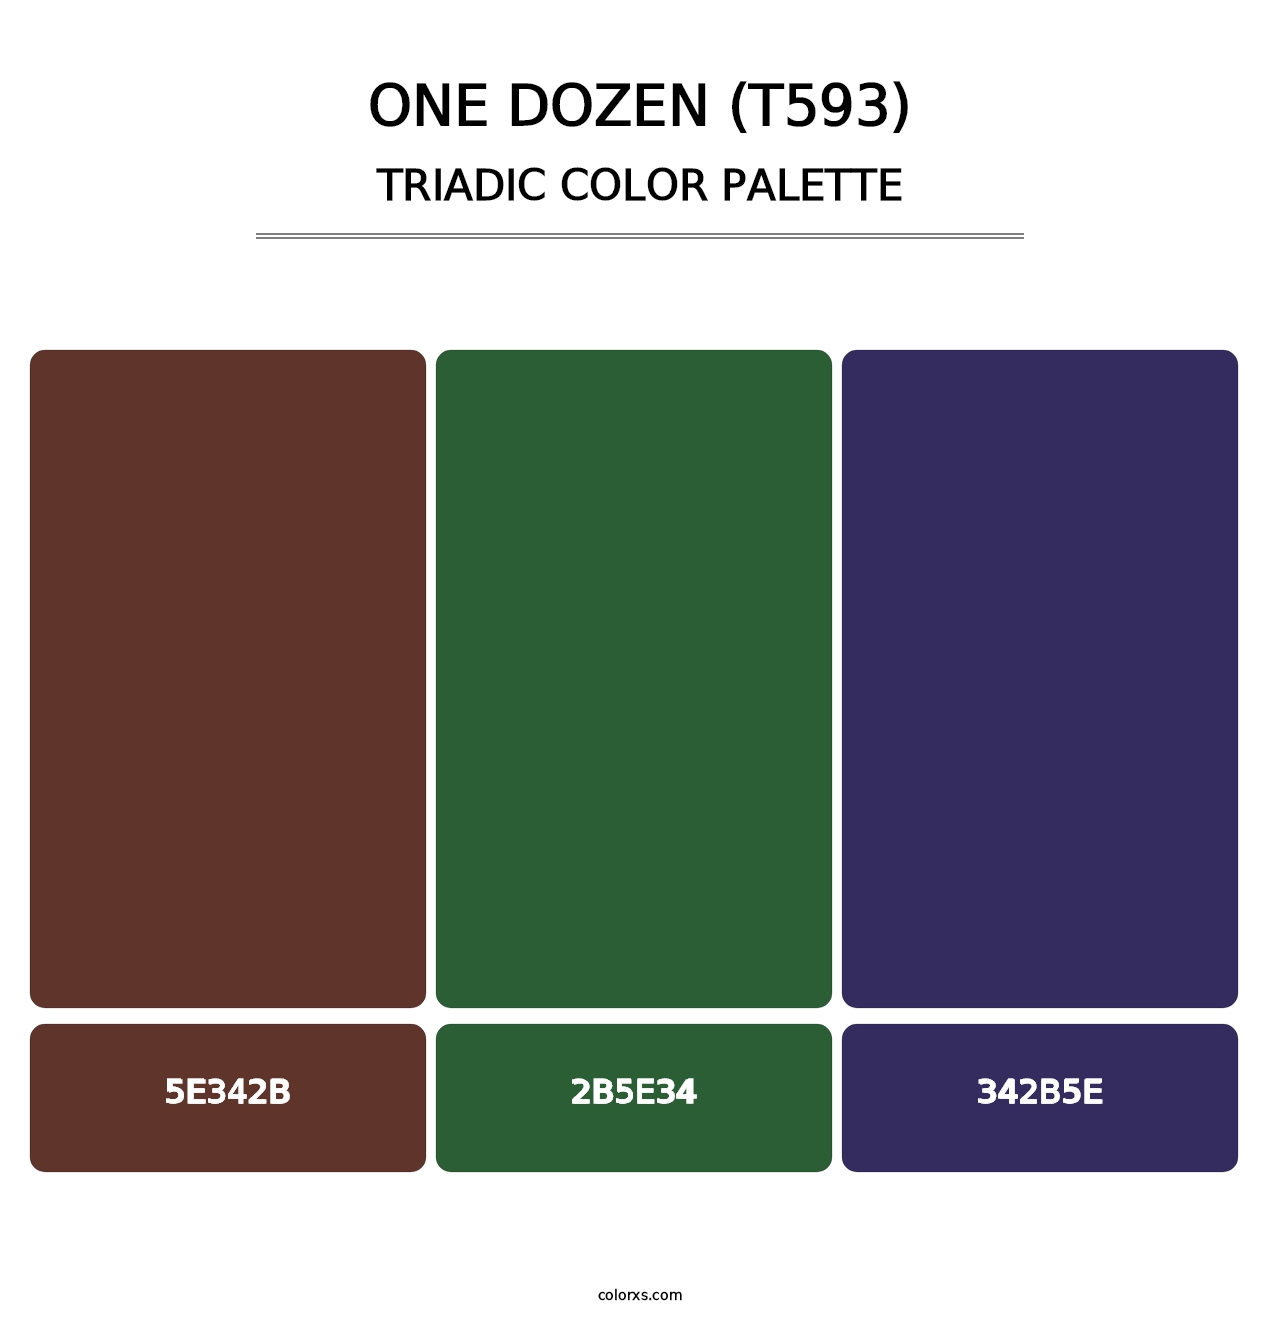 One Dozen (T593) - Triadic Color Palette